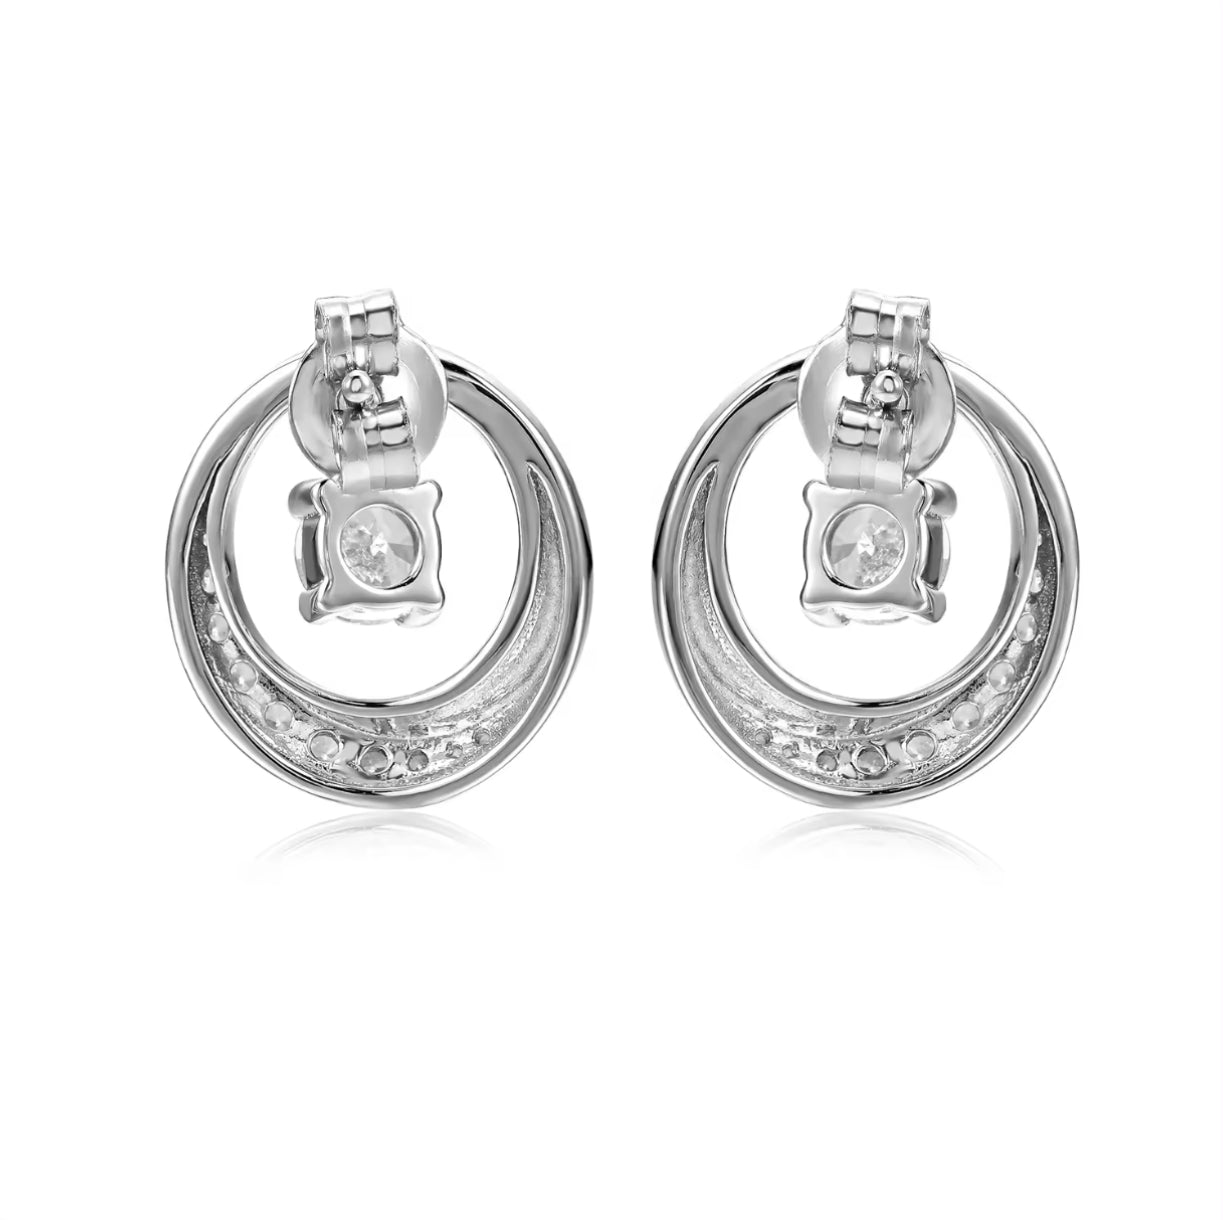 Round motif earrings